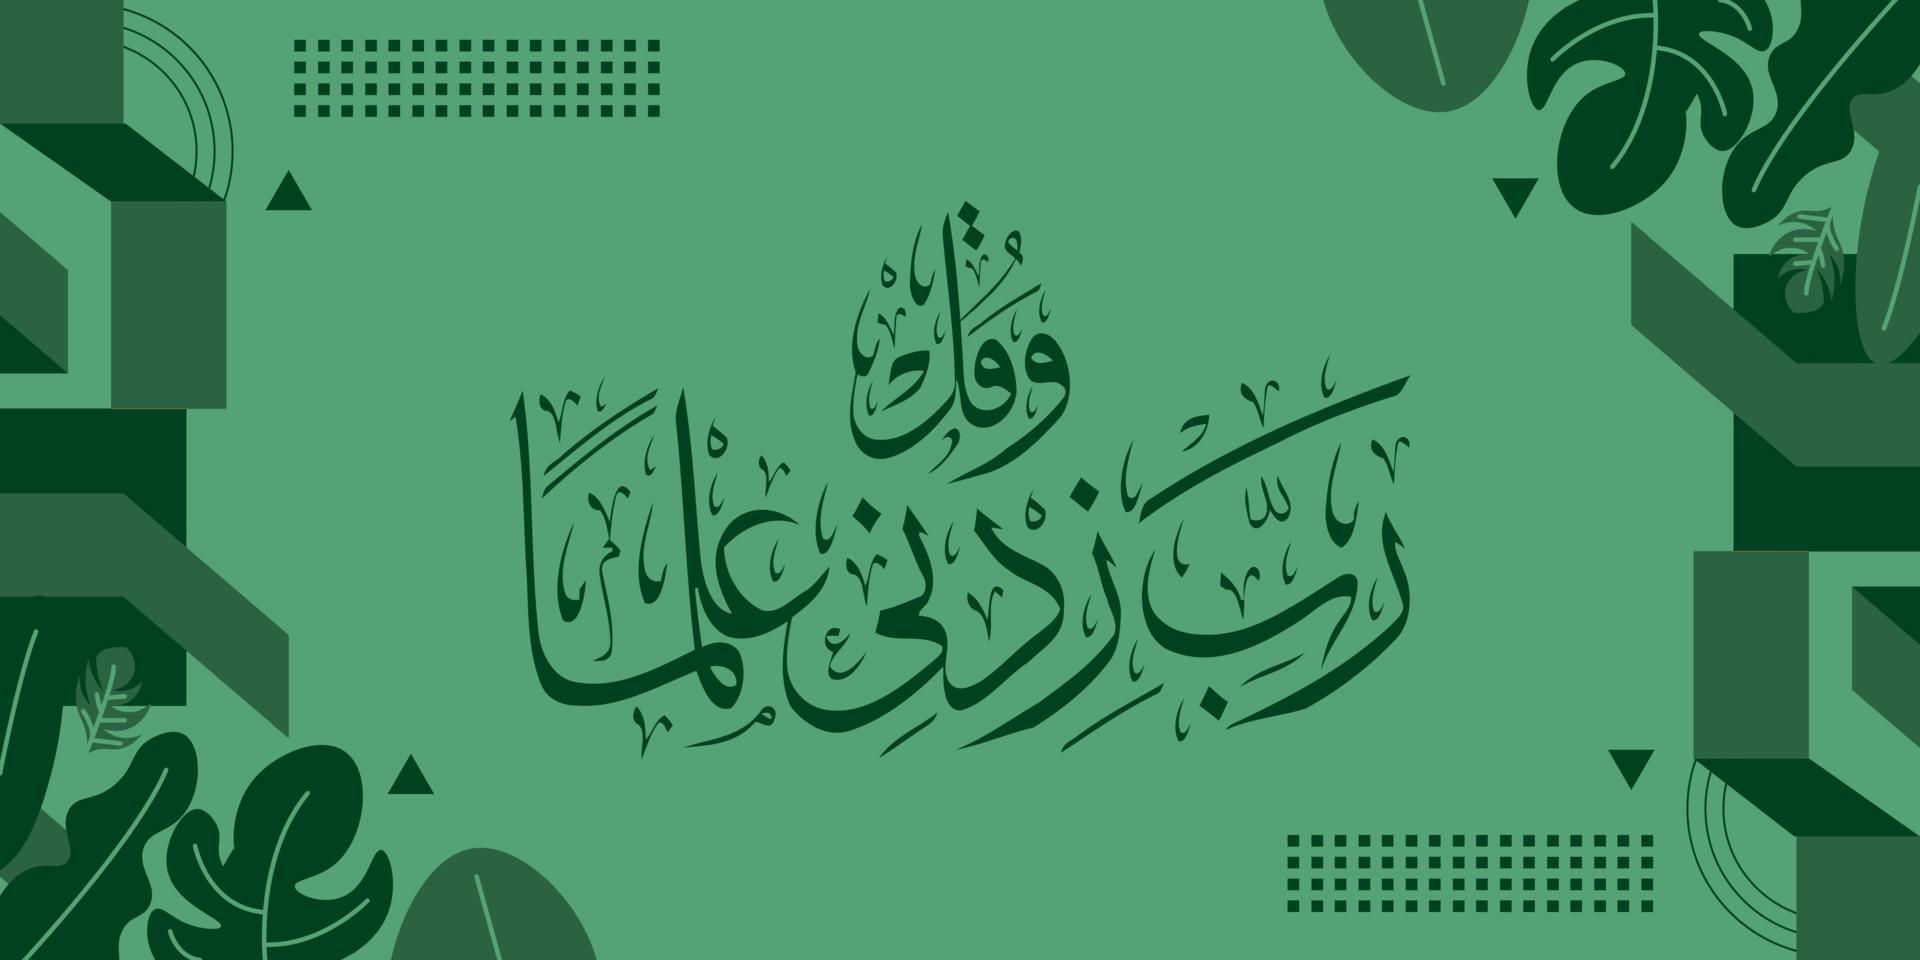 vektor illustration av arabicum kalligrafi på grön bakgrund